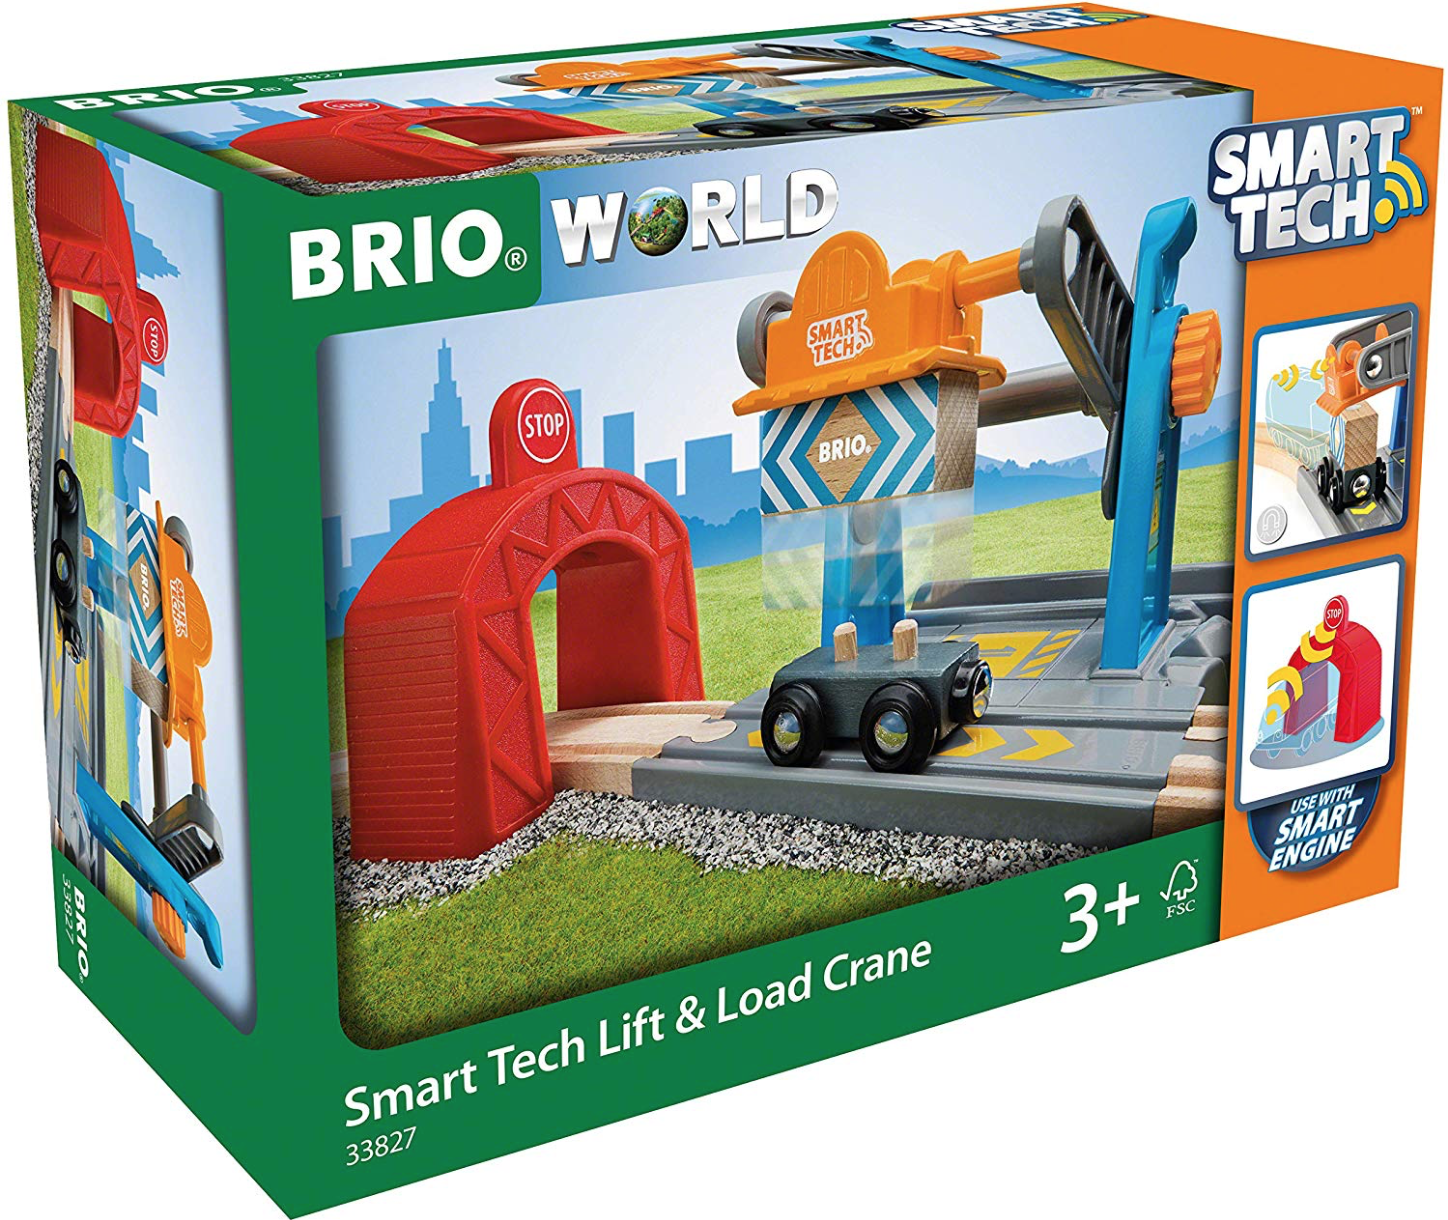 BRIO Smart Tech Lift & Load Crane